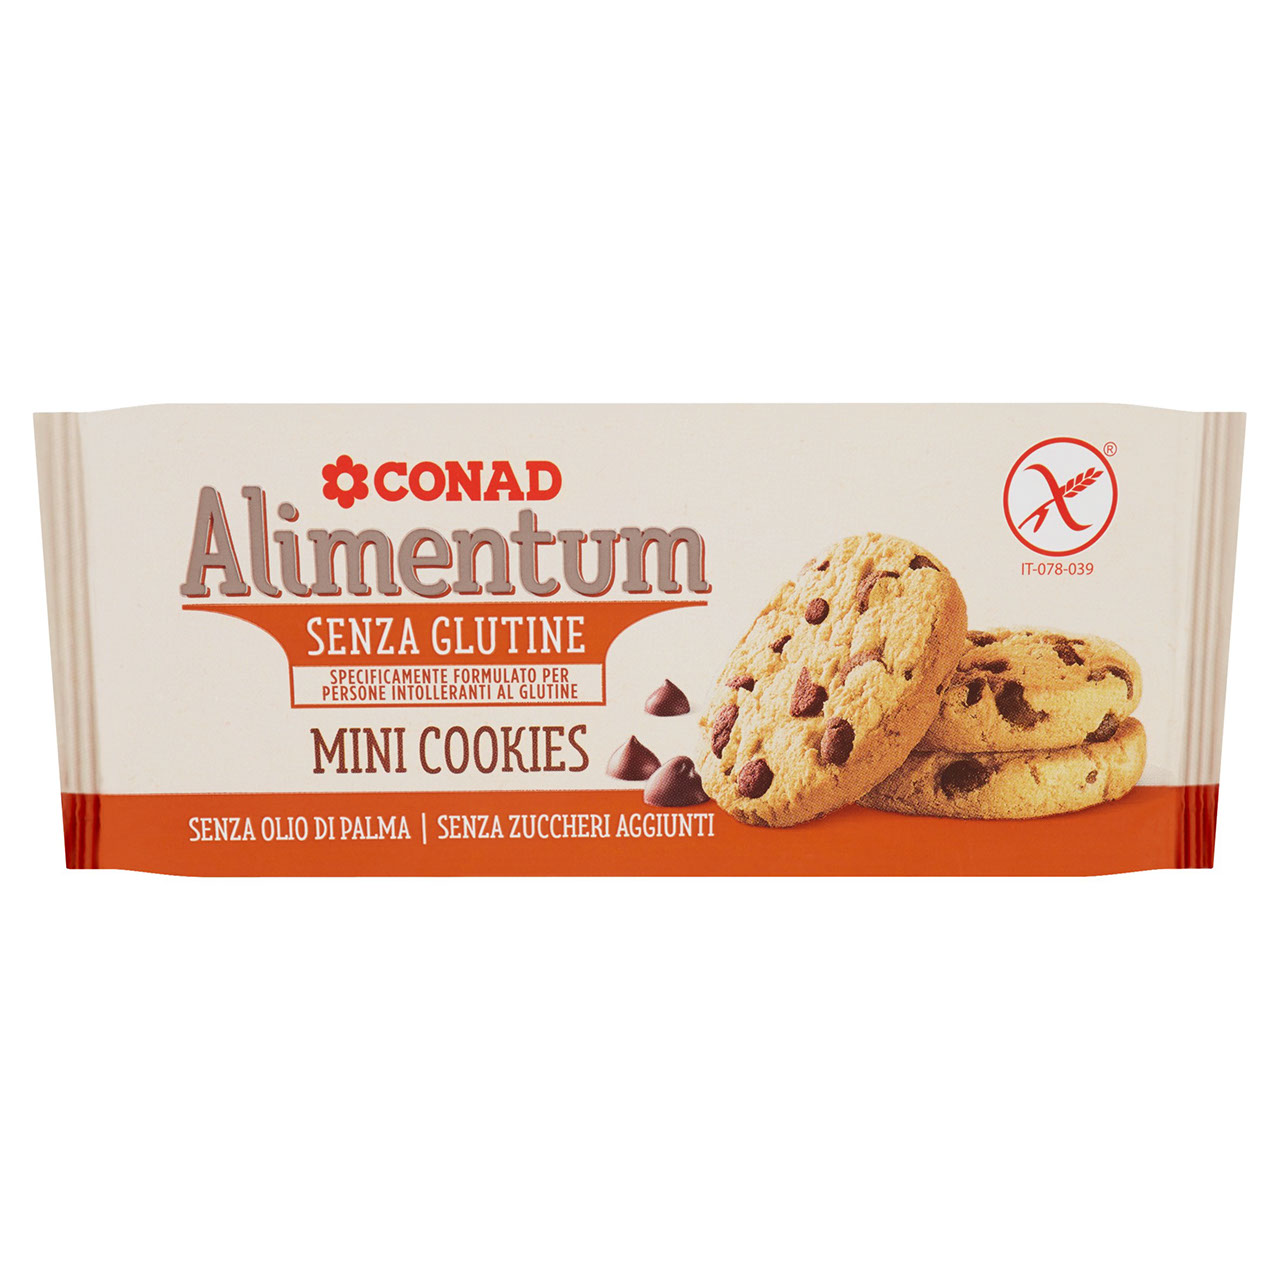 Alimentum Senza Glutine Mini Cookies 130 g Conad